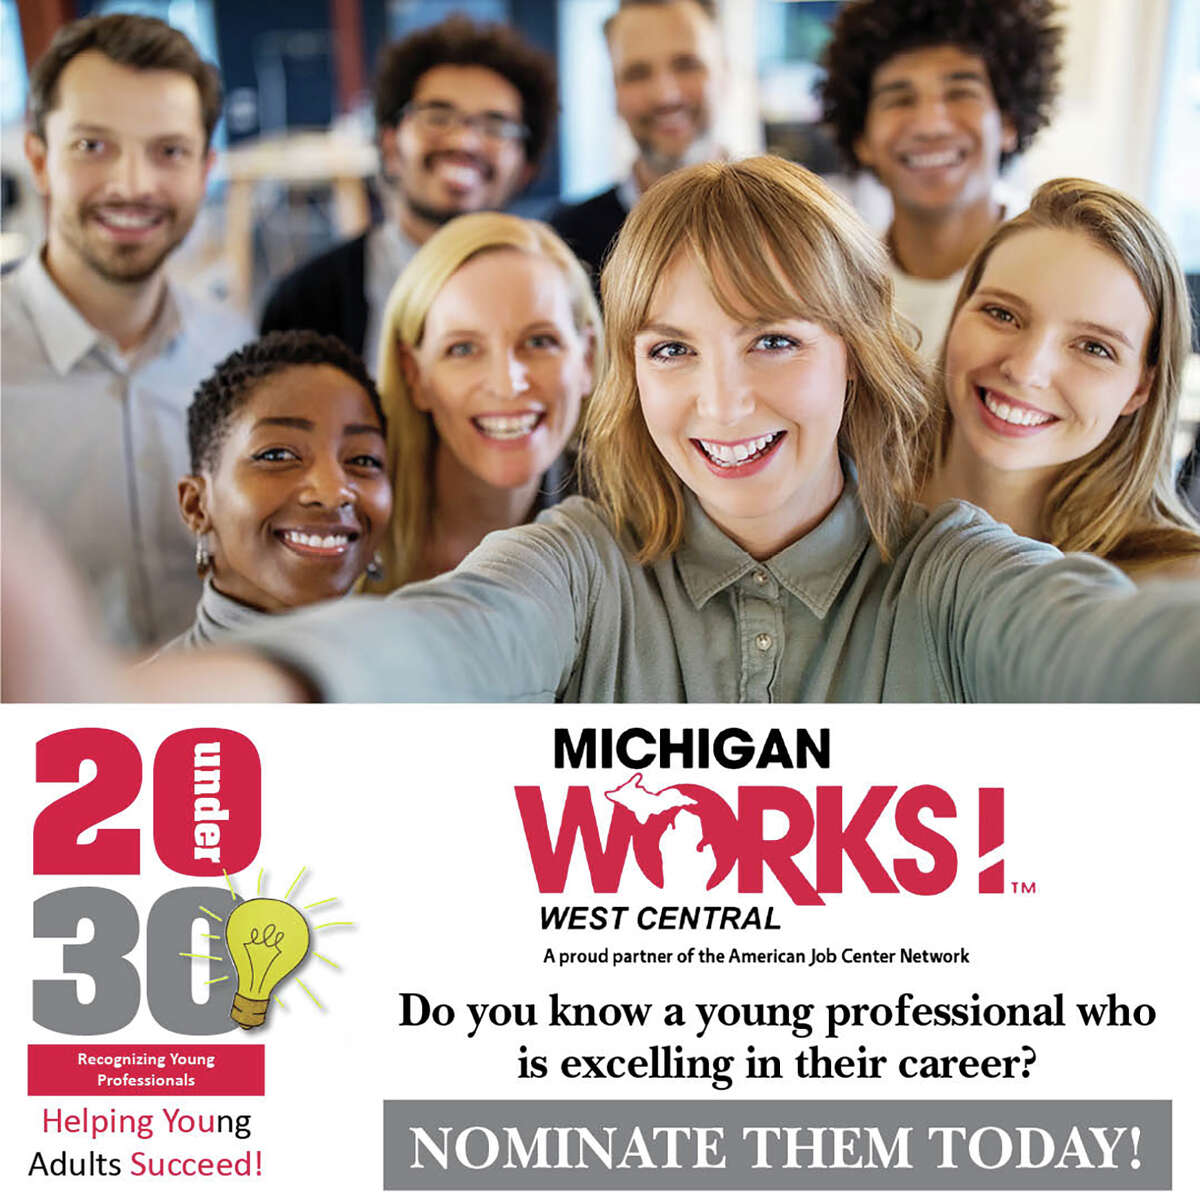 Michigan Works! seeks the top 20 professionals under 30